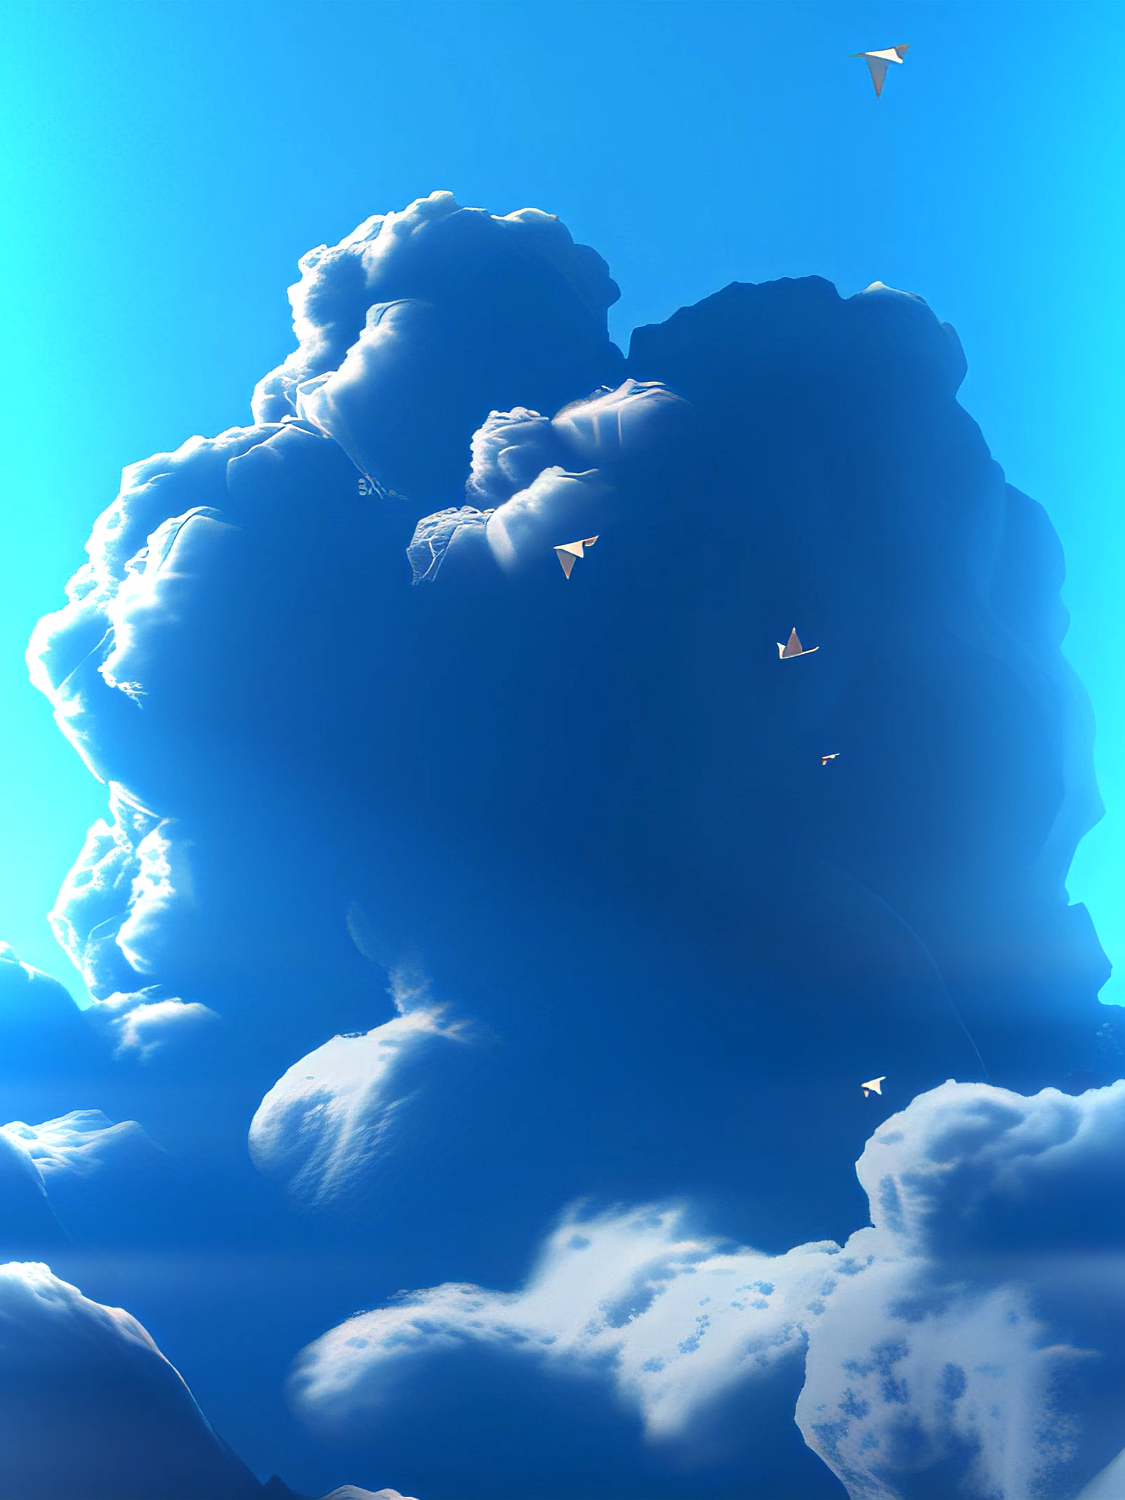 #skychildrenofthelight #skycotl #skyenfantdelalumiere #skyfiglidellaluce #アニメ